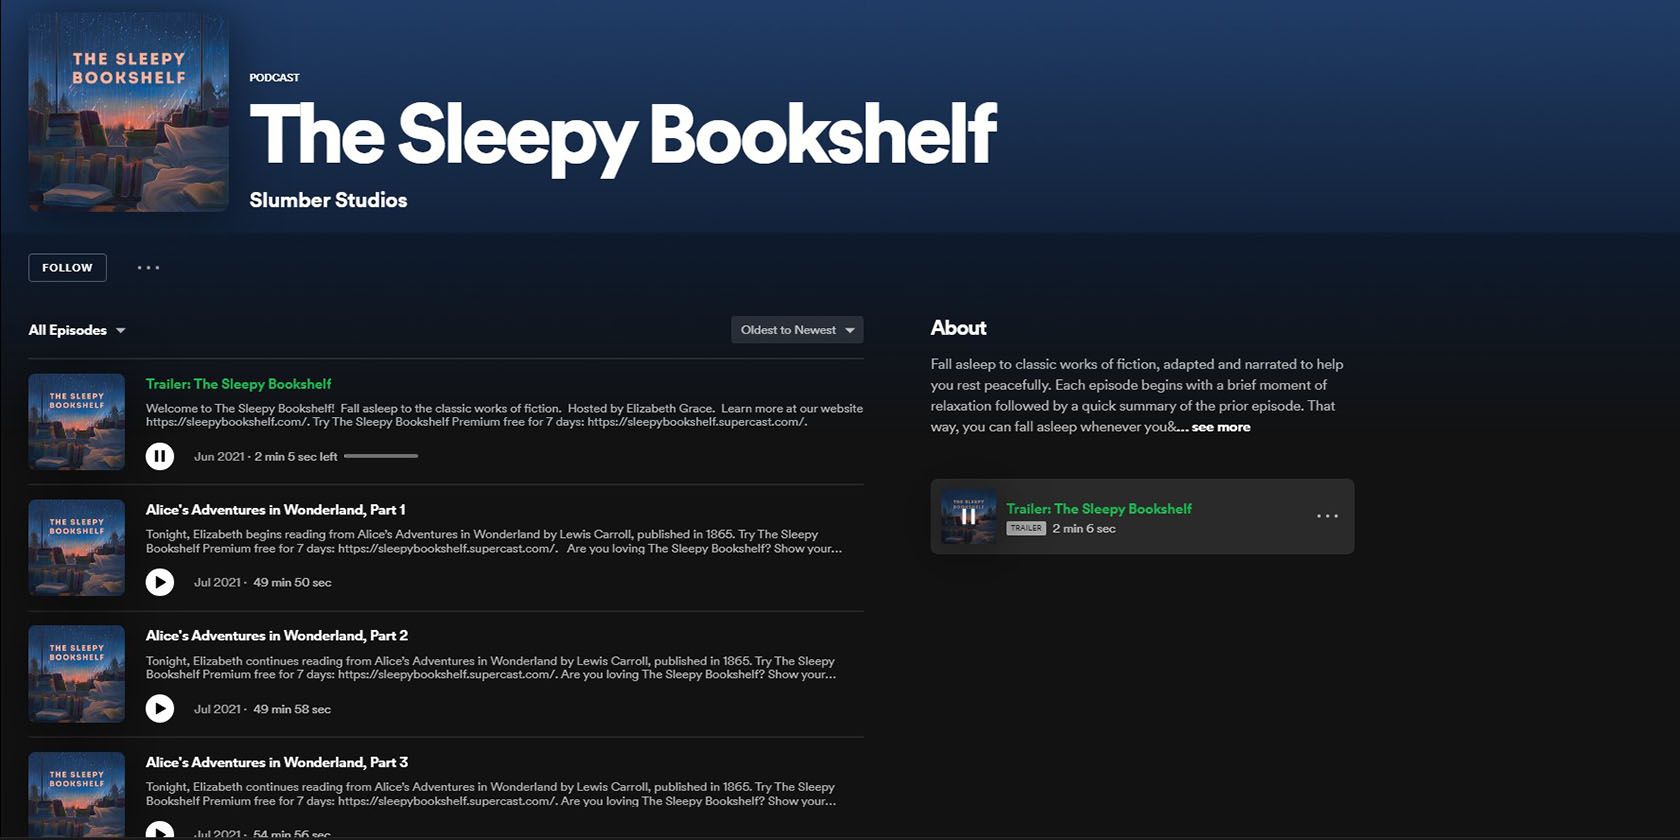 The Sleepy Bookshelf podcast on Spotify